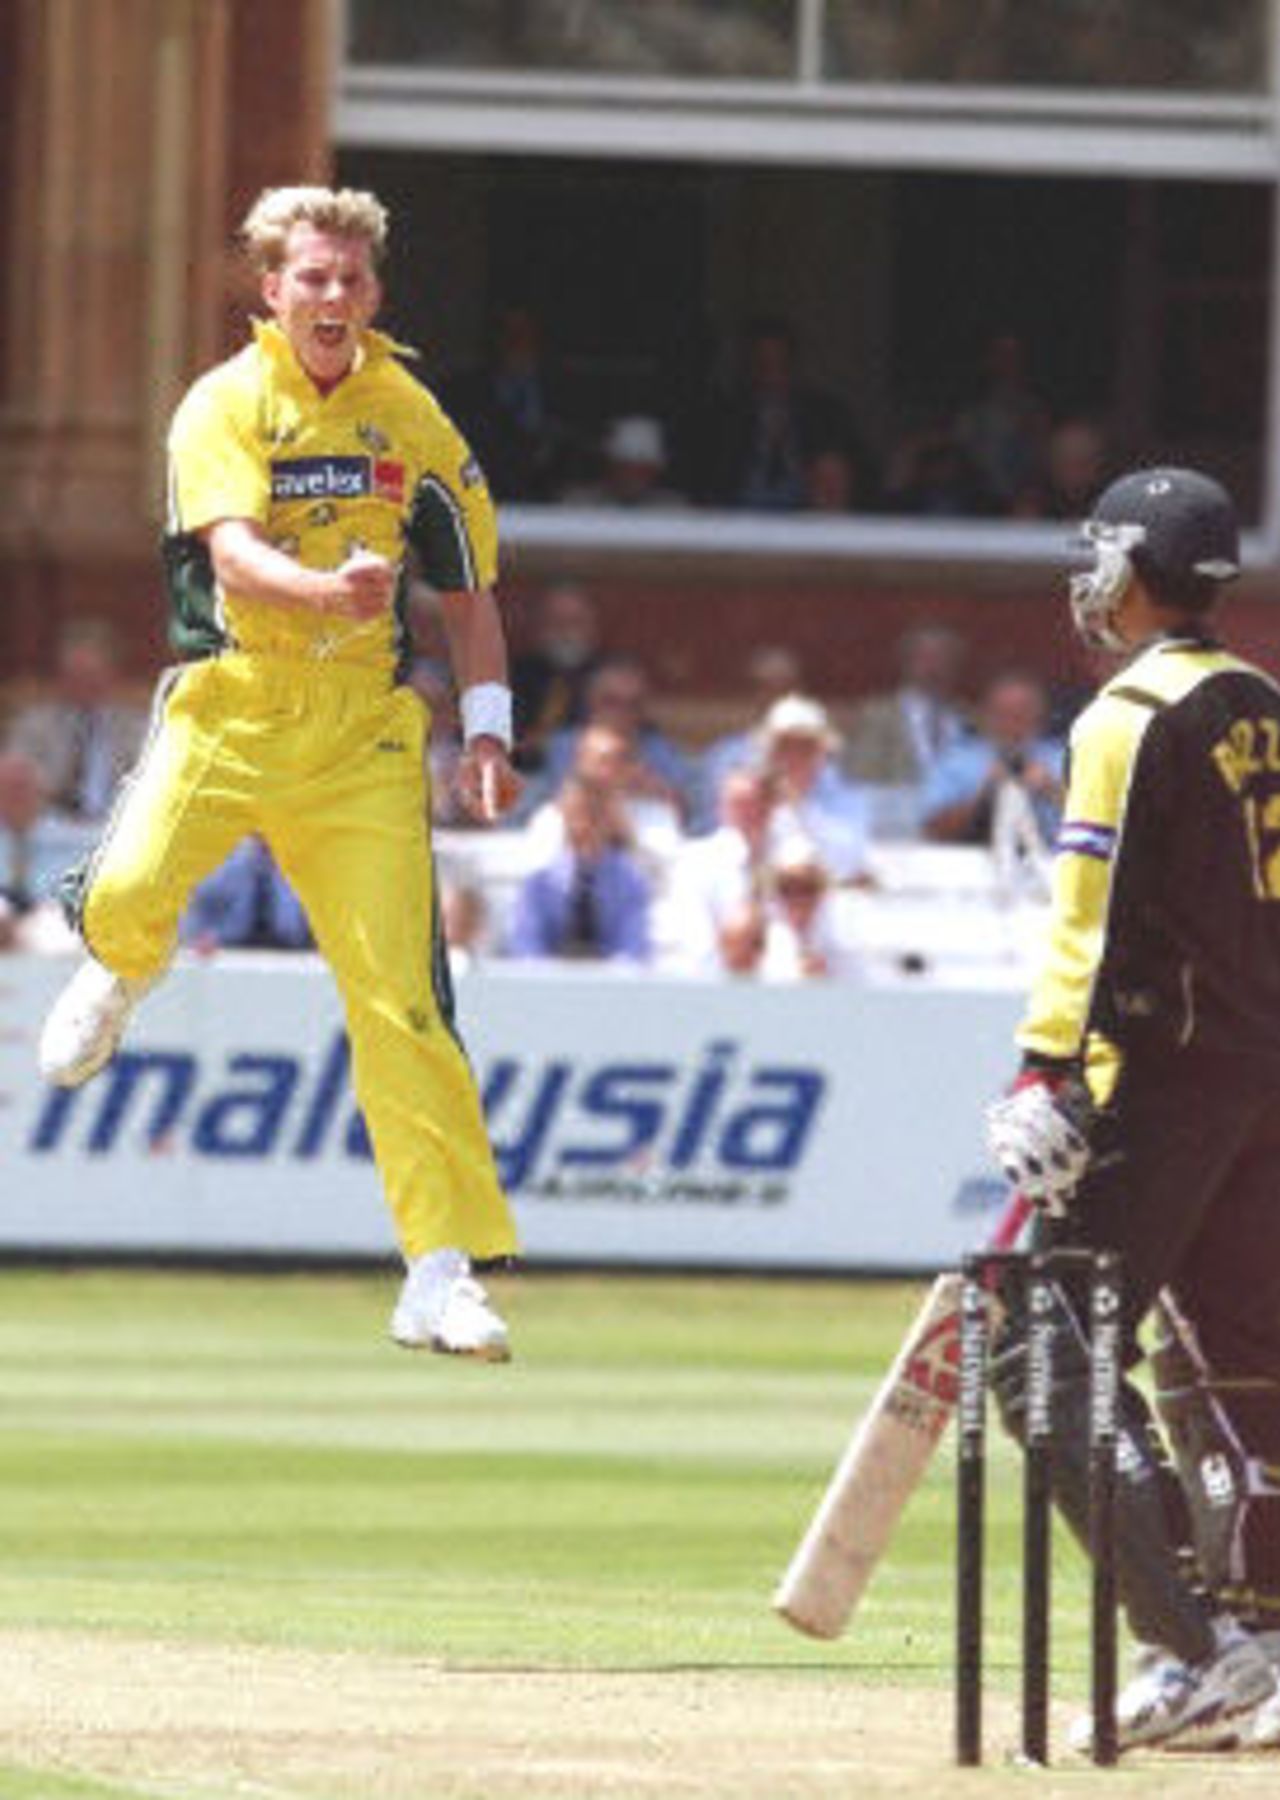 Brett Lee leaps high in the air celebrating the dismissal of Abdur Razzaq, final ODI at Lords, 23 June 2001.